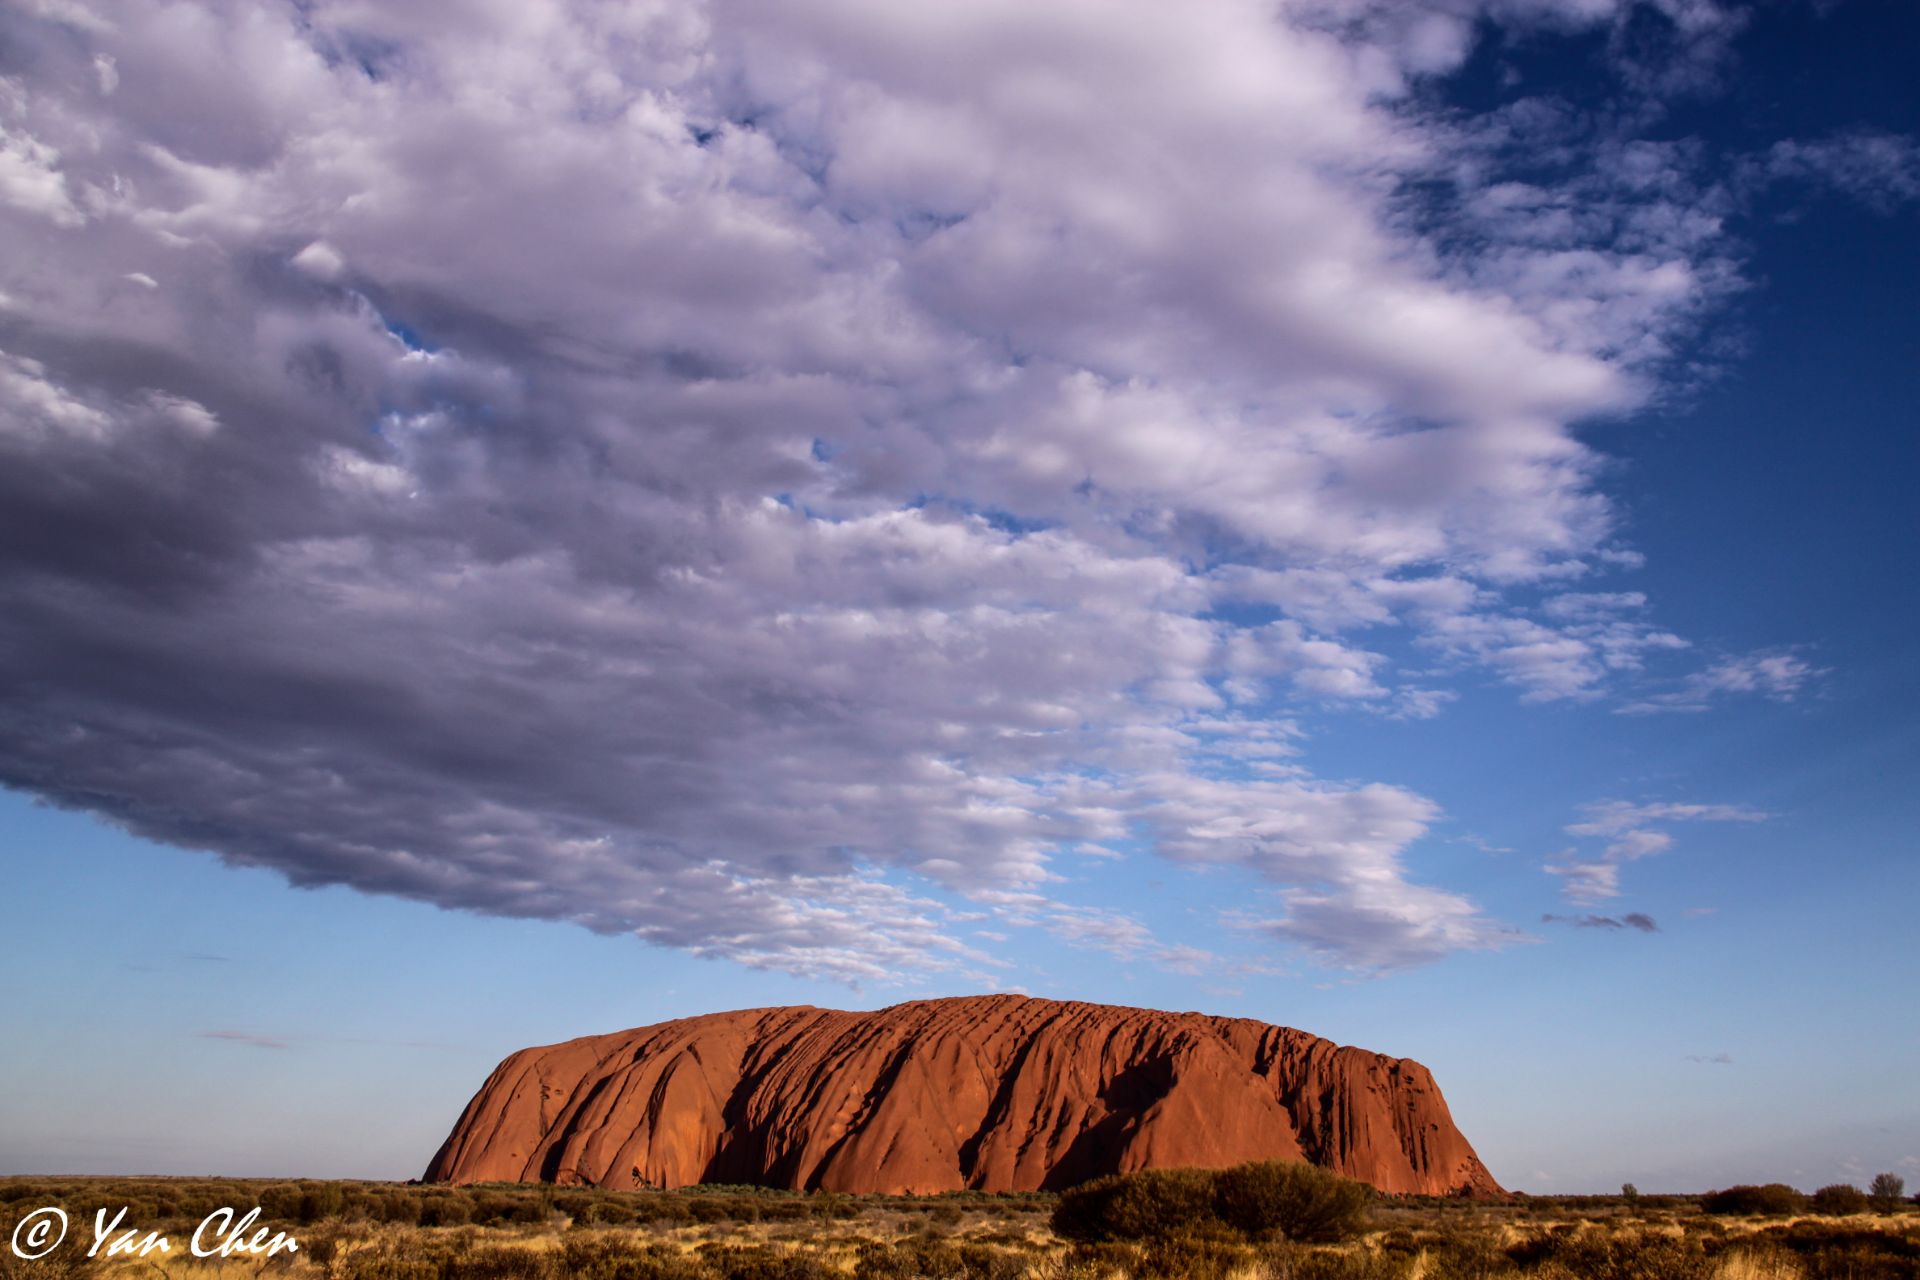 Uluru, or Ayers Rock, is a massive sandstone monol